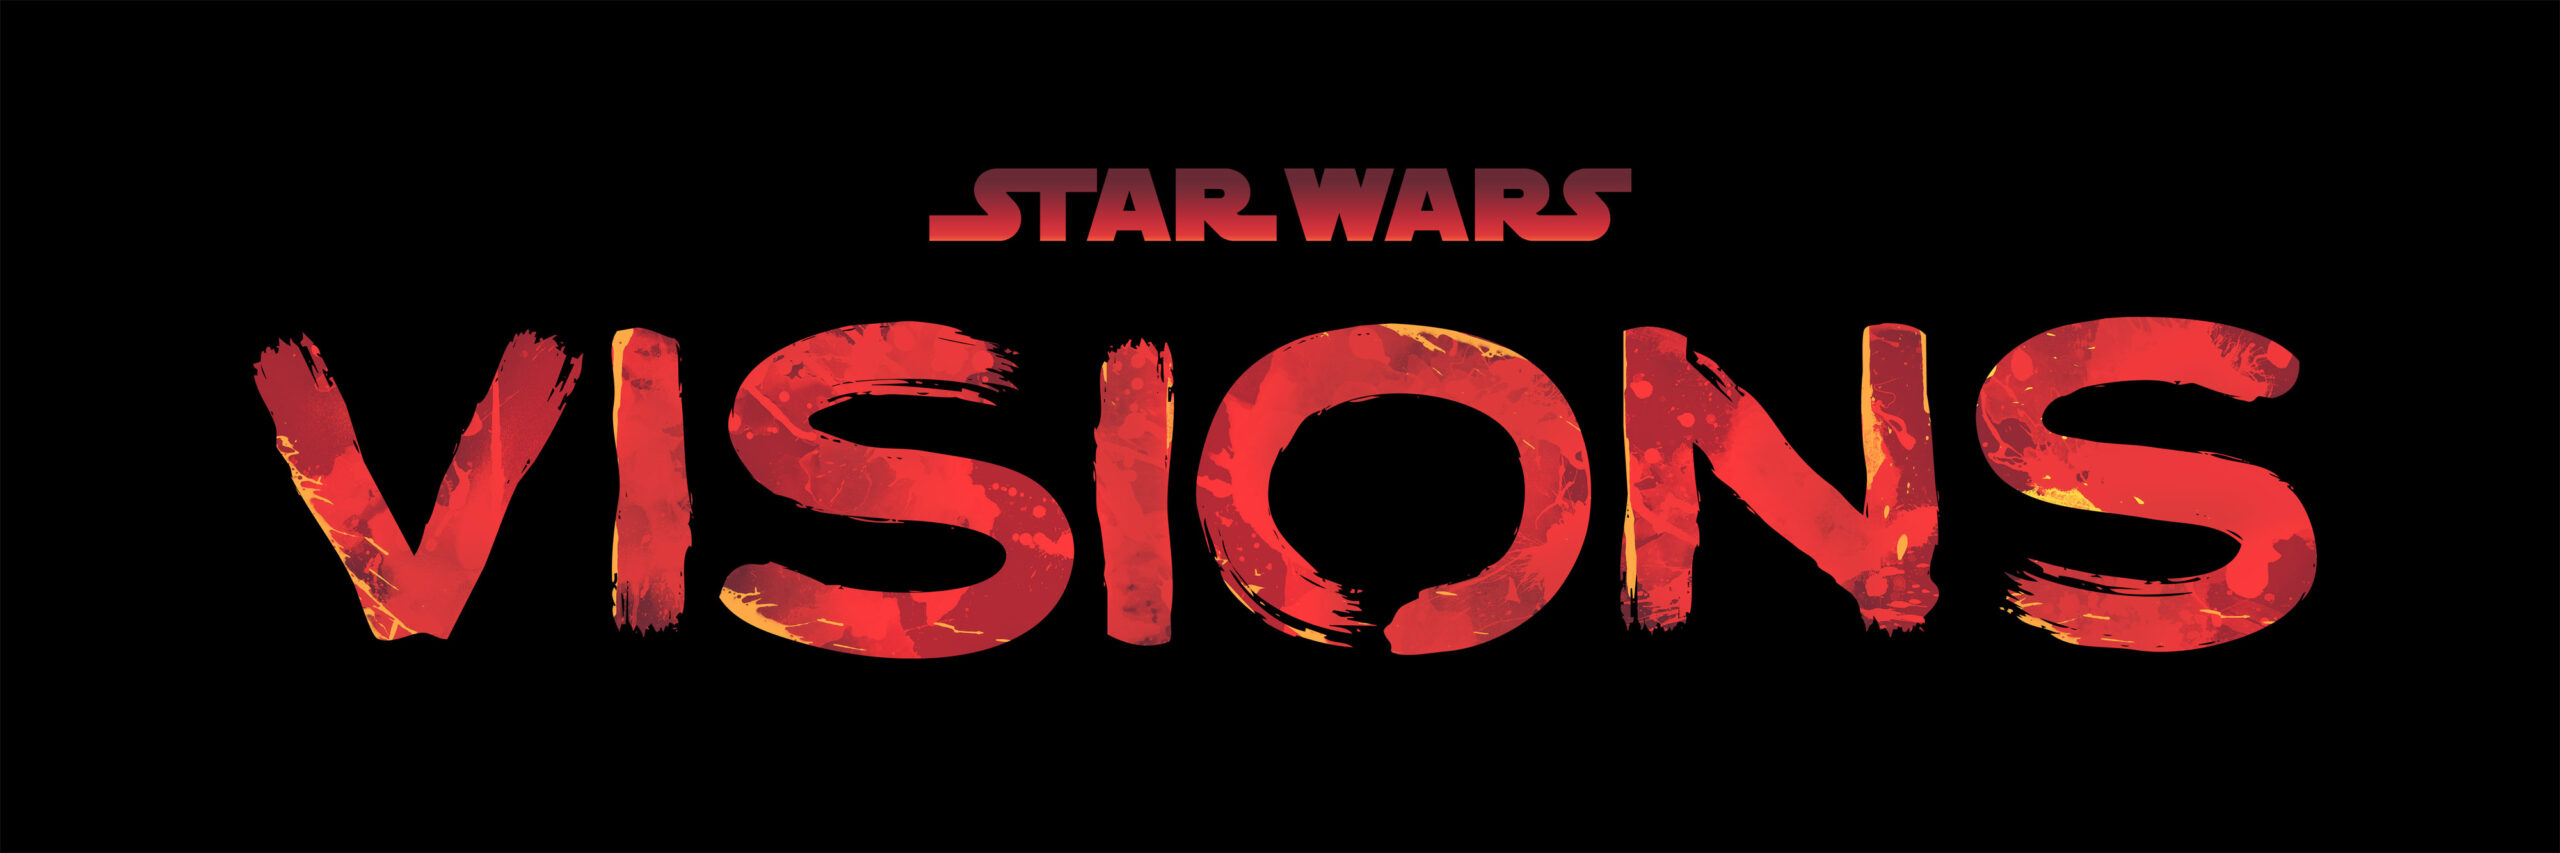 Star Wars Visions Season 2 Coming To Disney+ Soon